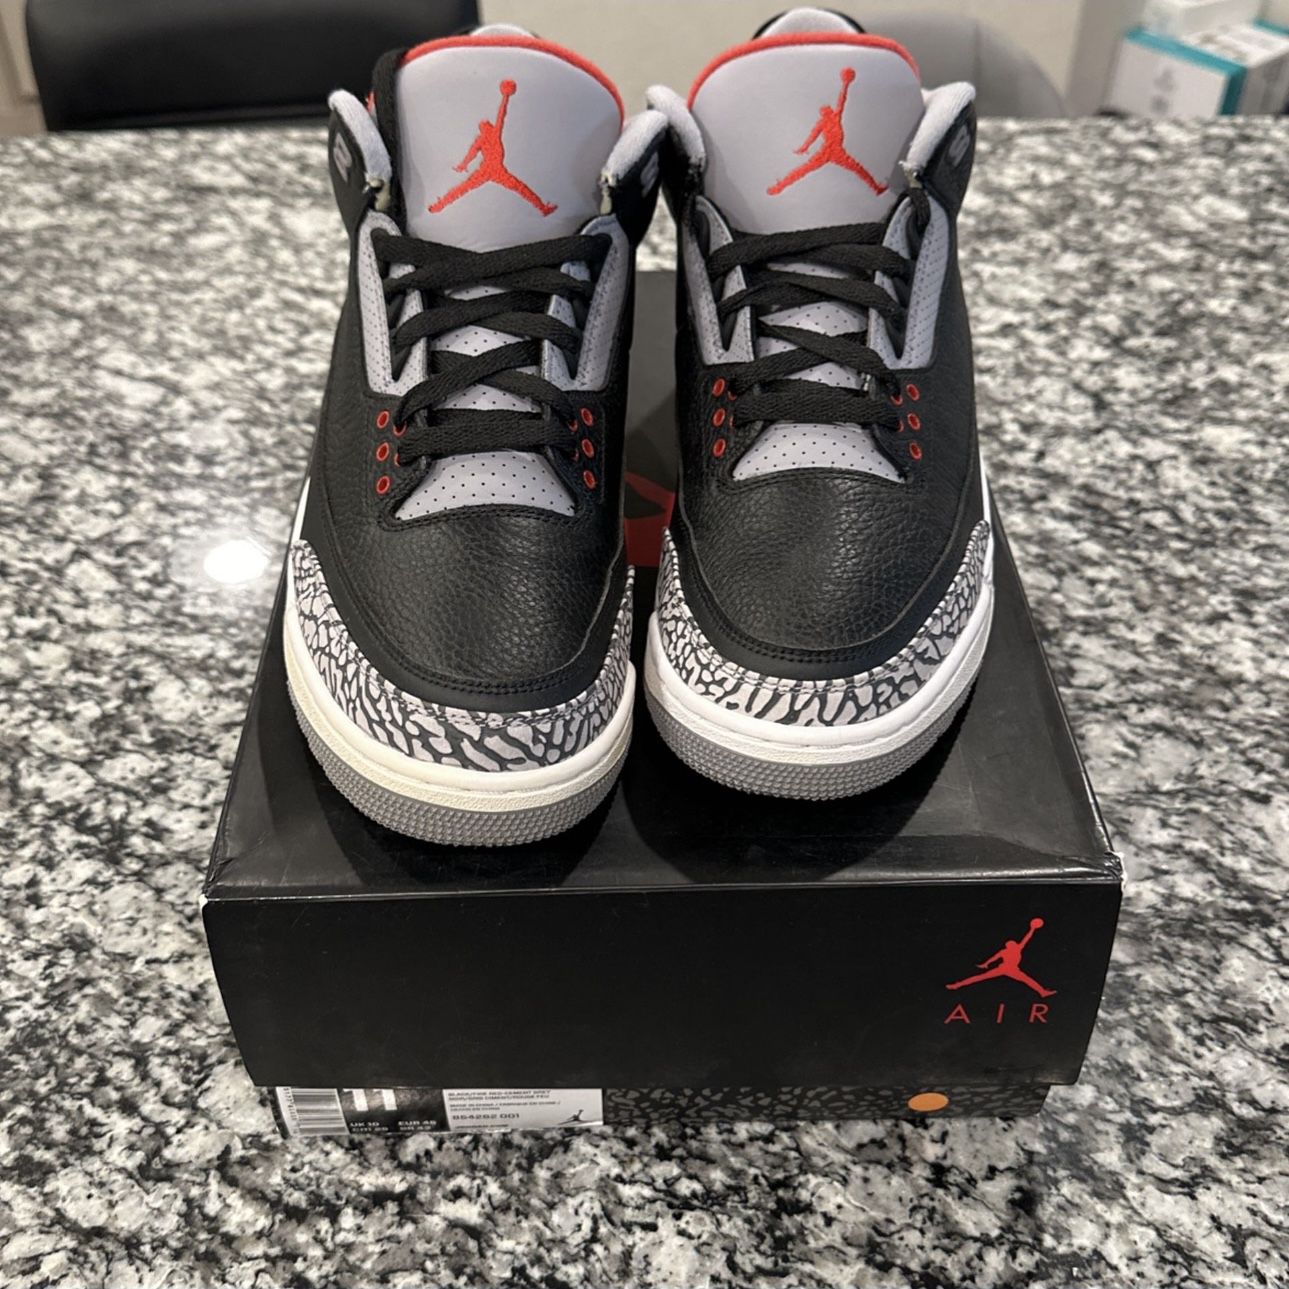 Air Jordan 3 Black Cement (2018) Size 11